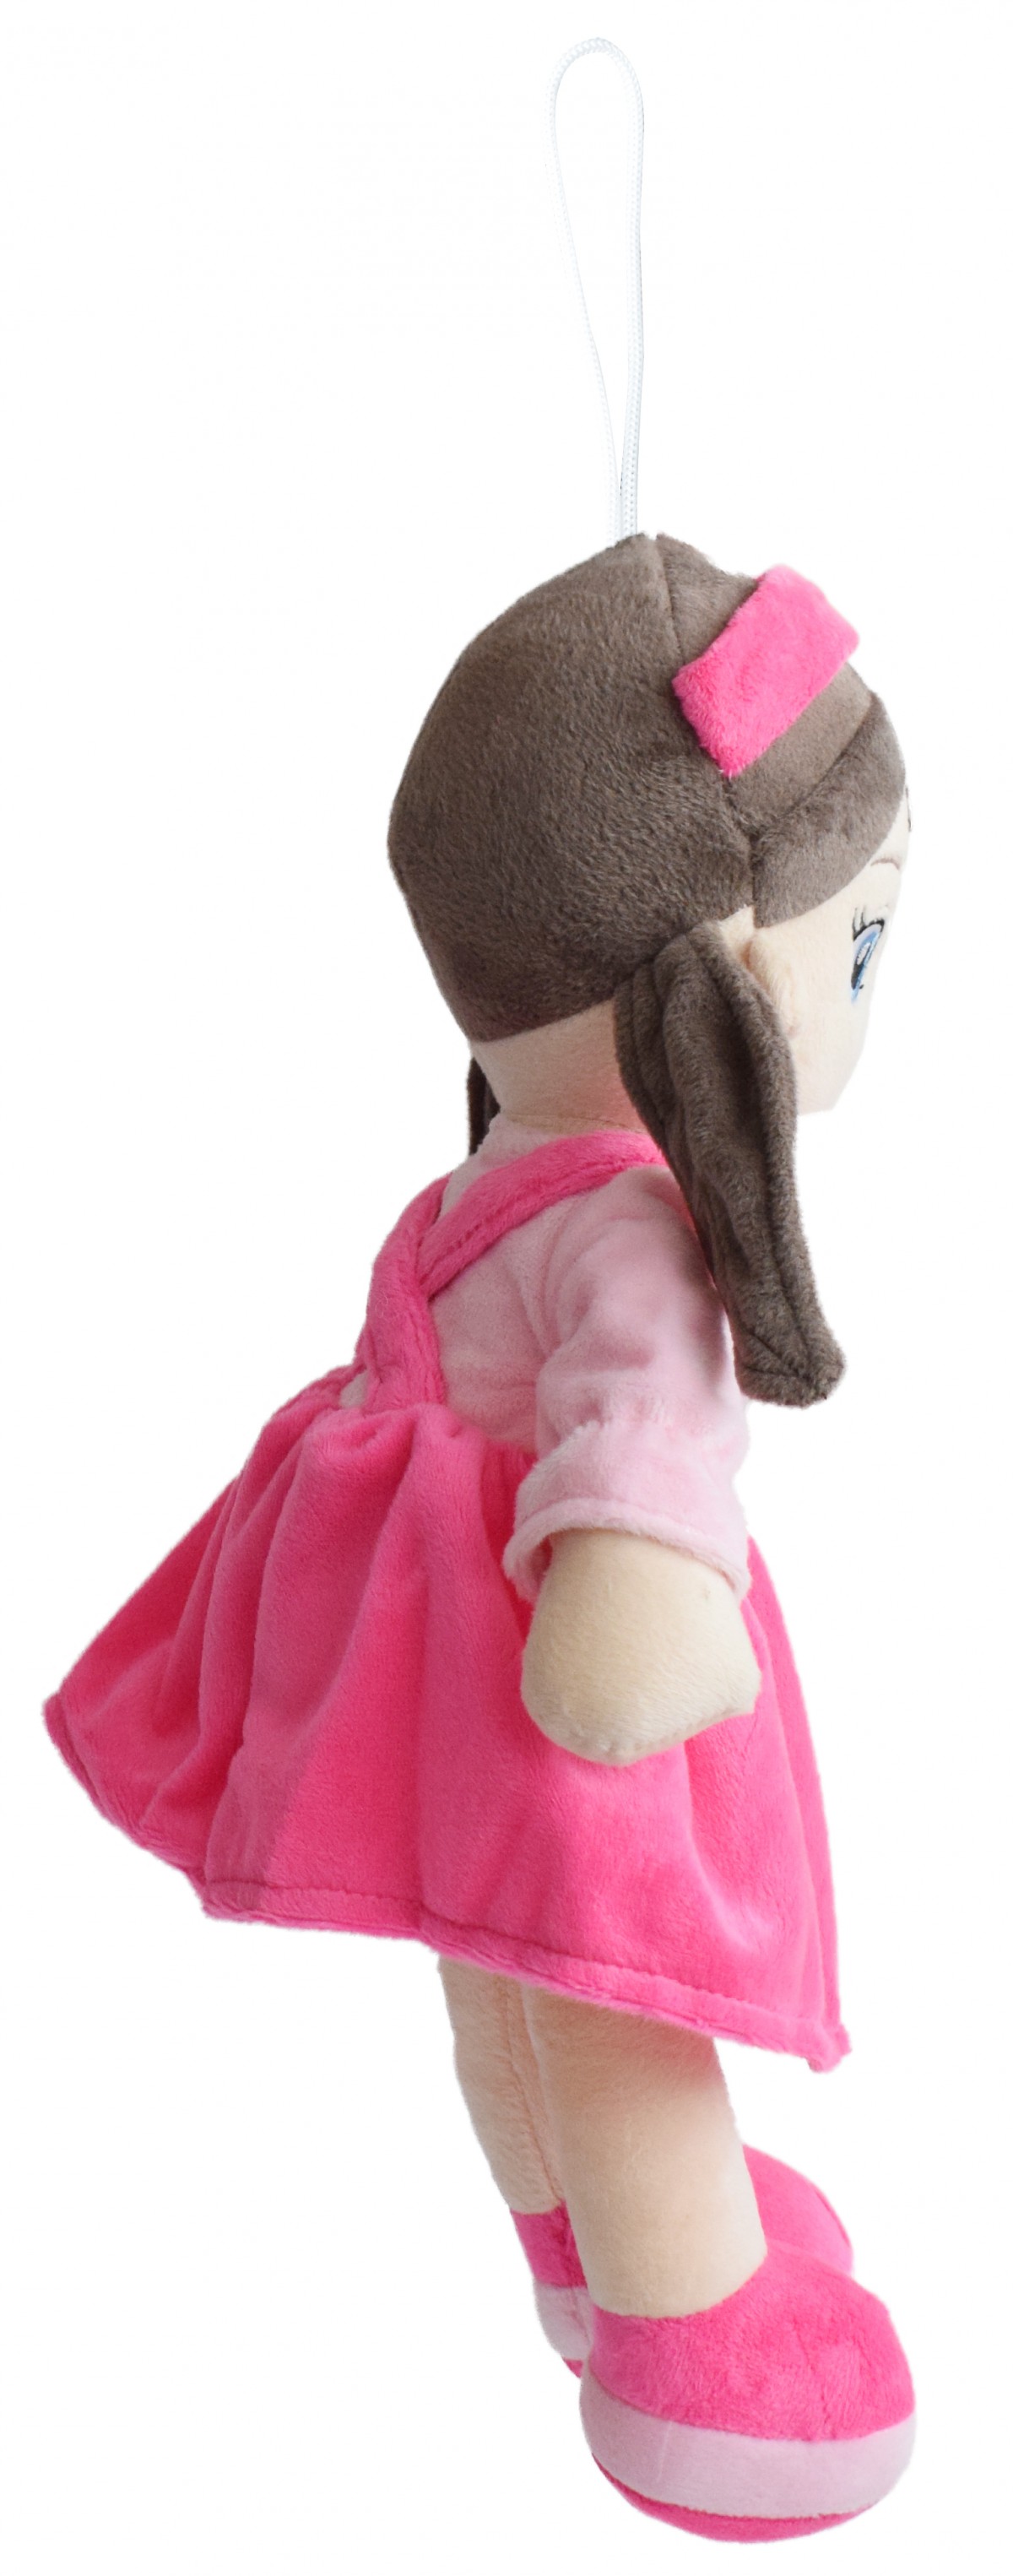 Plush Cute Super Soft Toy Huggable Doll By Mirada, 38Cm, Pink